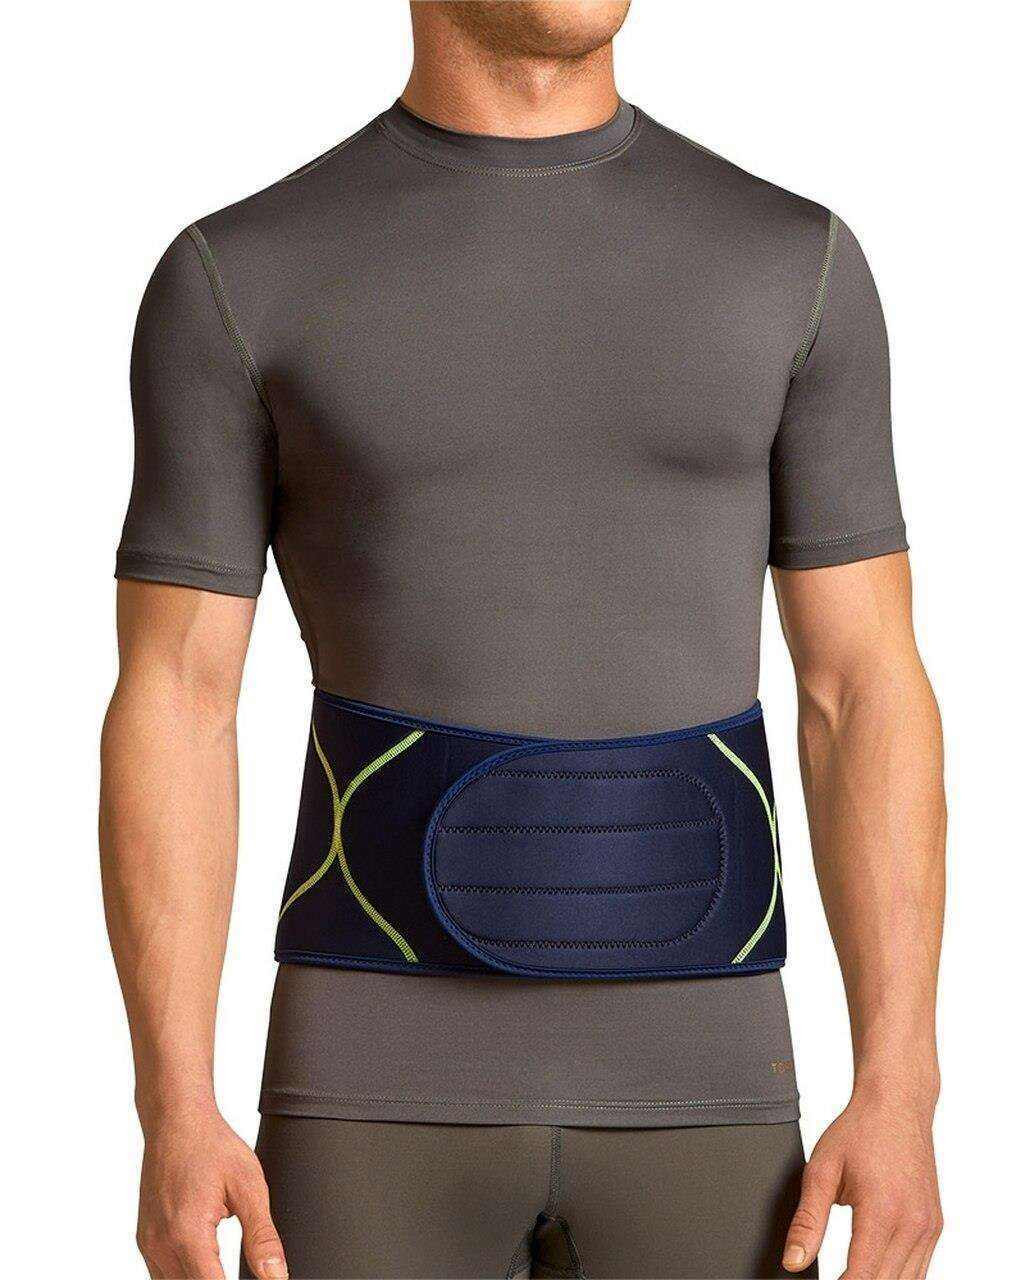 Men's Back Support Belt, Wearable Wellness